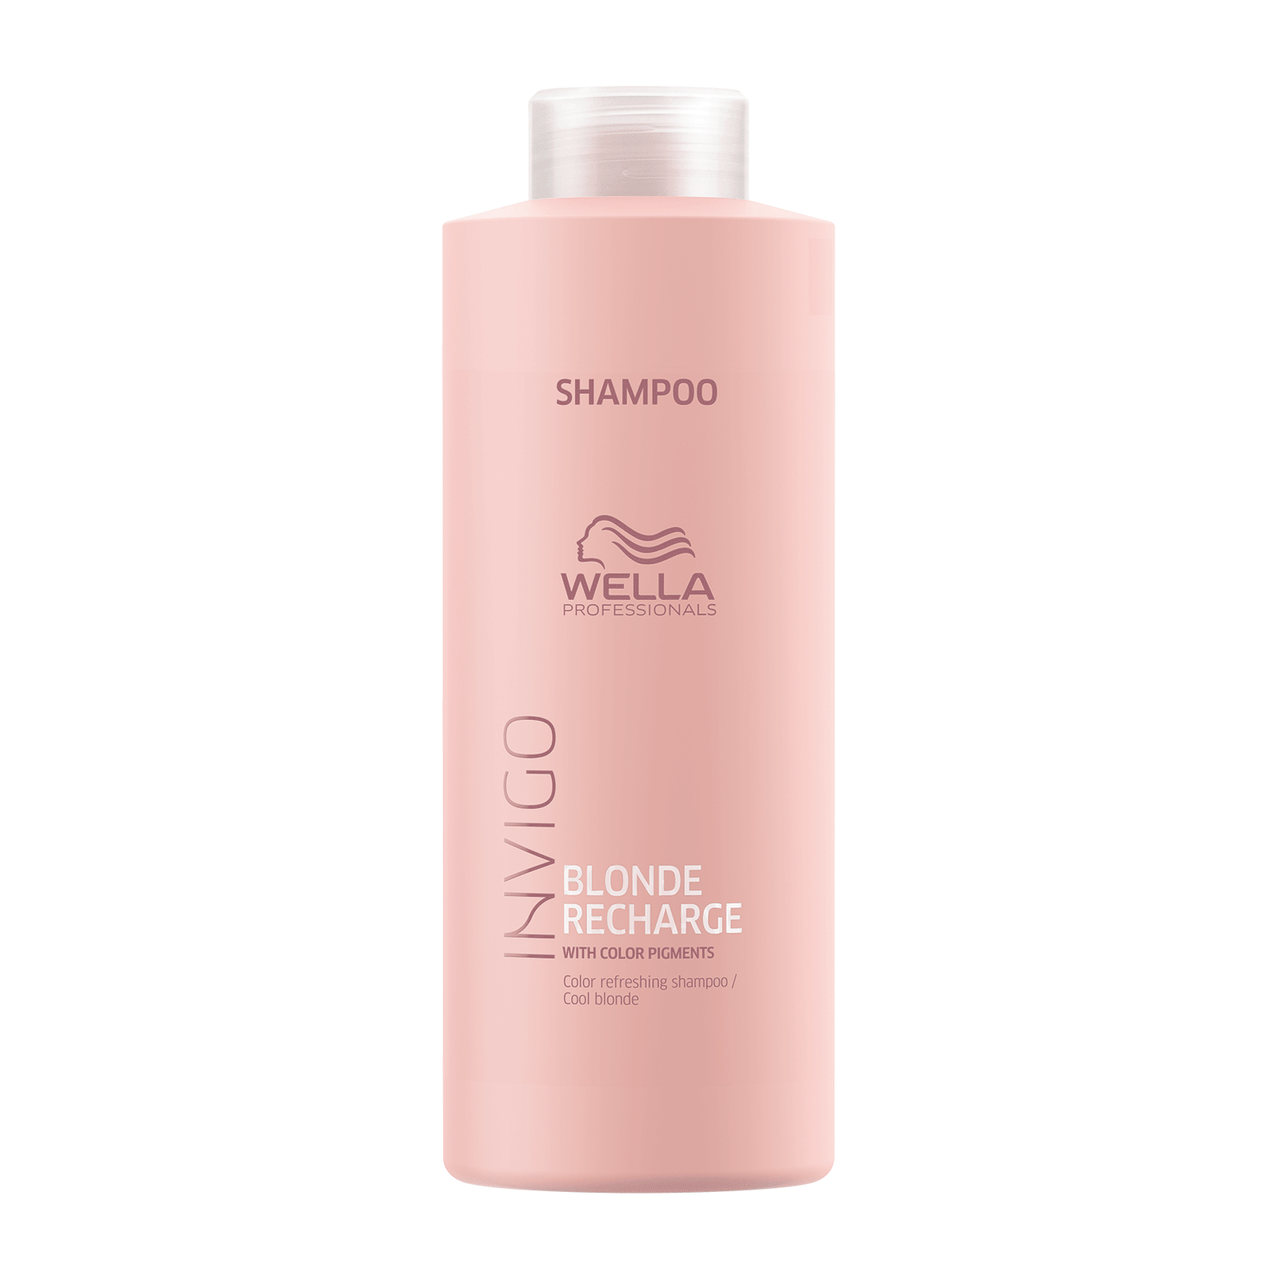 Wella INVIGO Recharge Color Refreshing Shampoo for Cool Blondes 33.8 fl oz